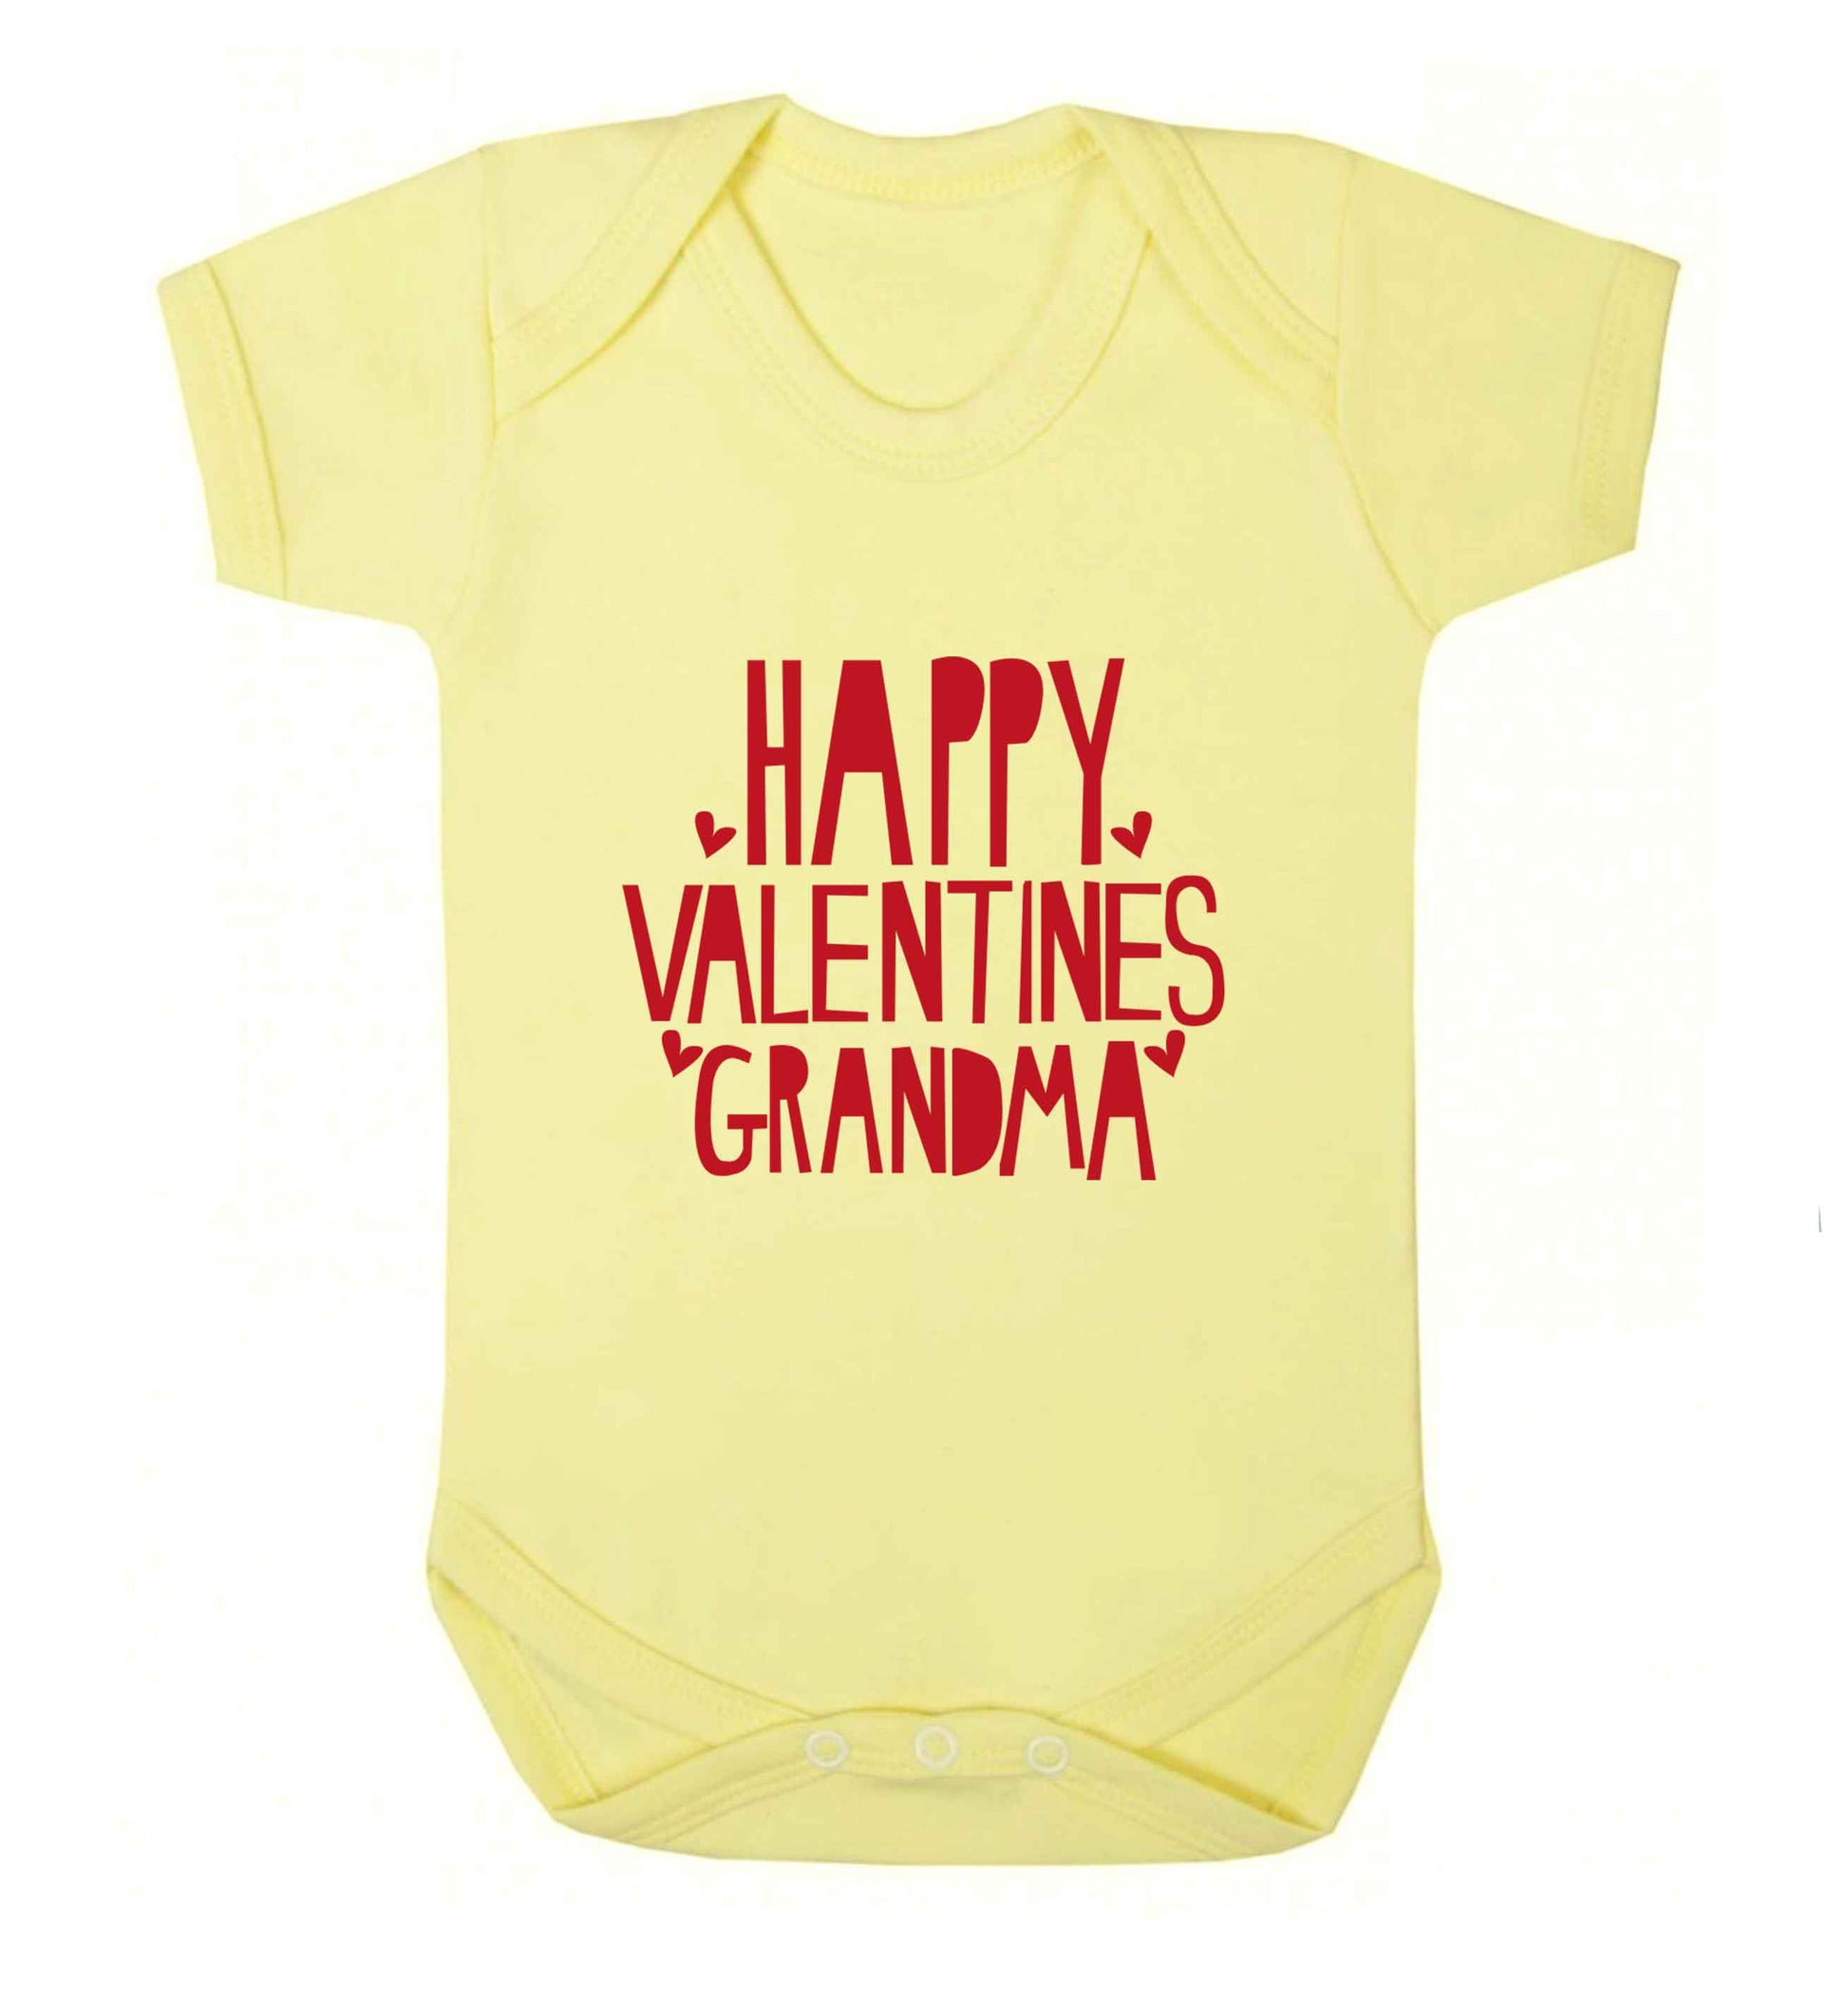 Happy valentines grandma baby vest pale yellow 18-24 months